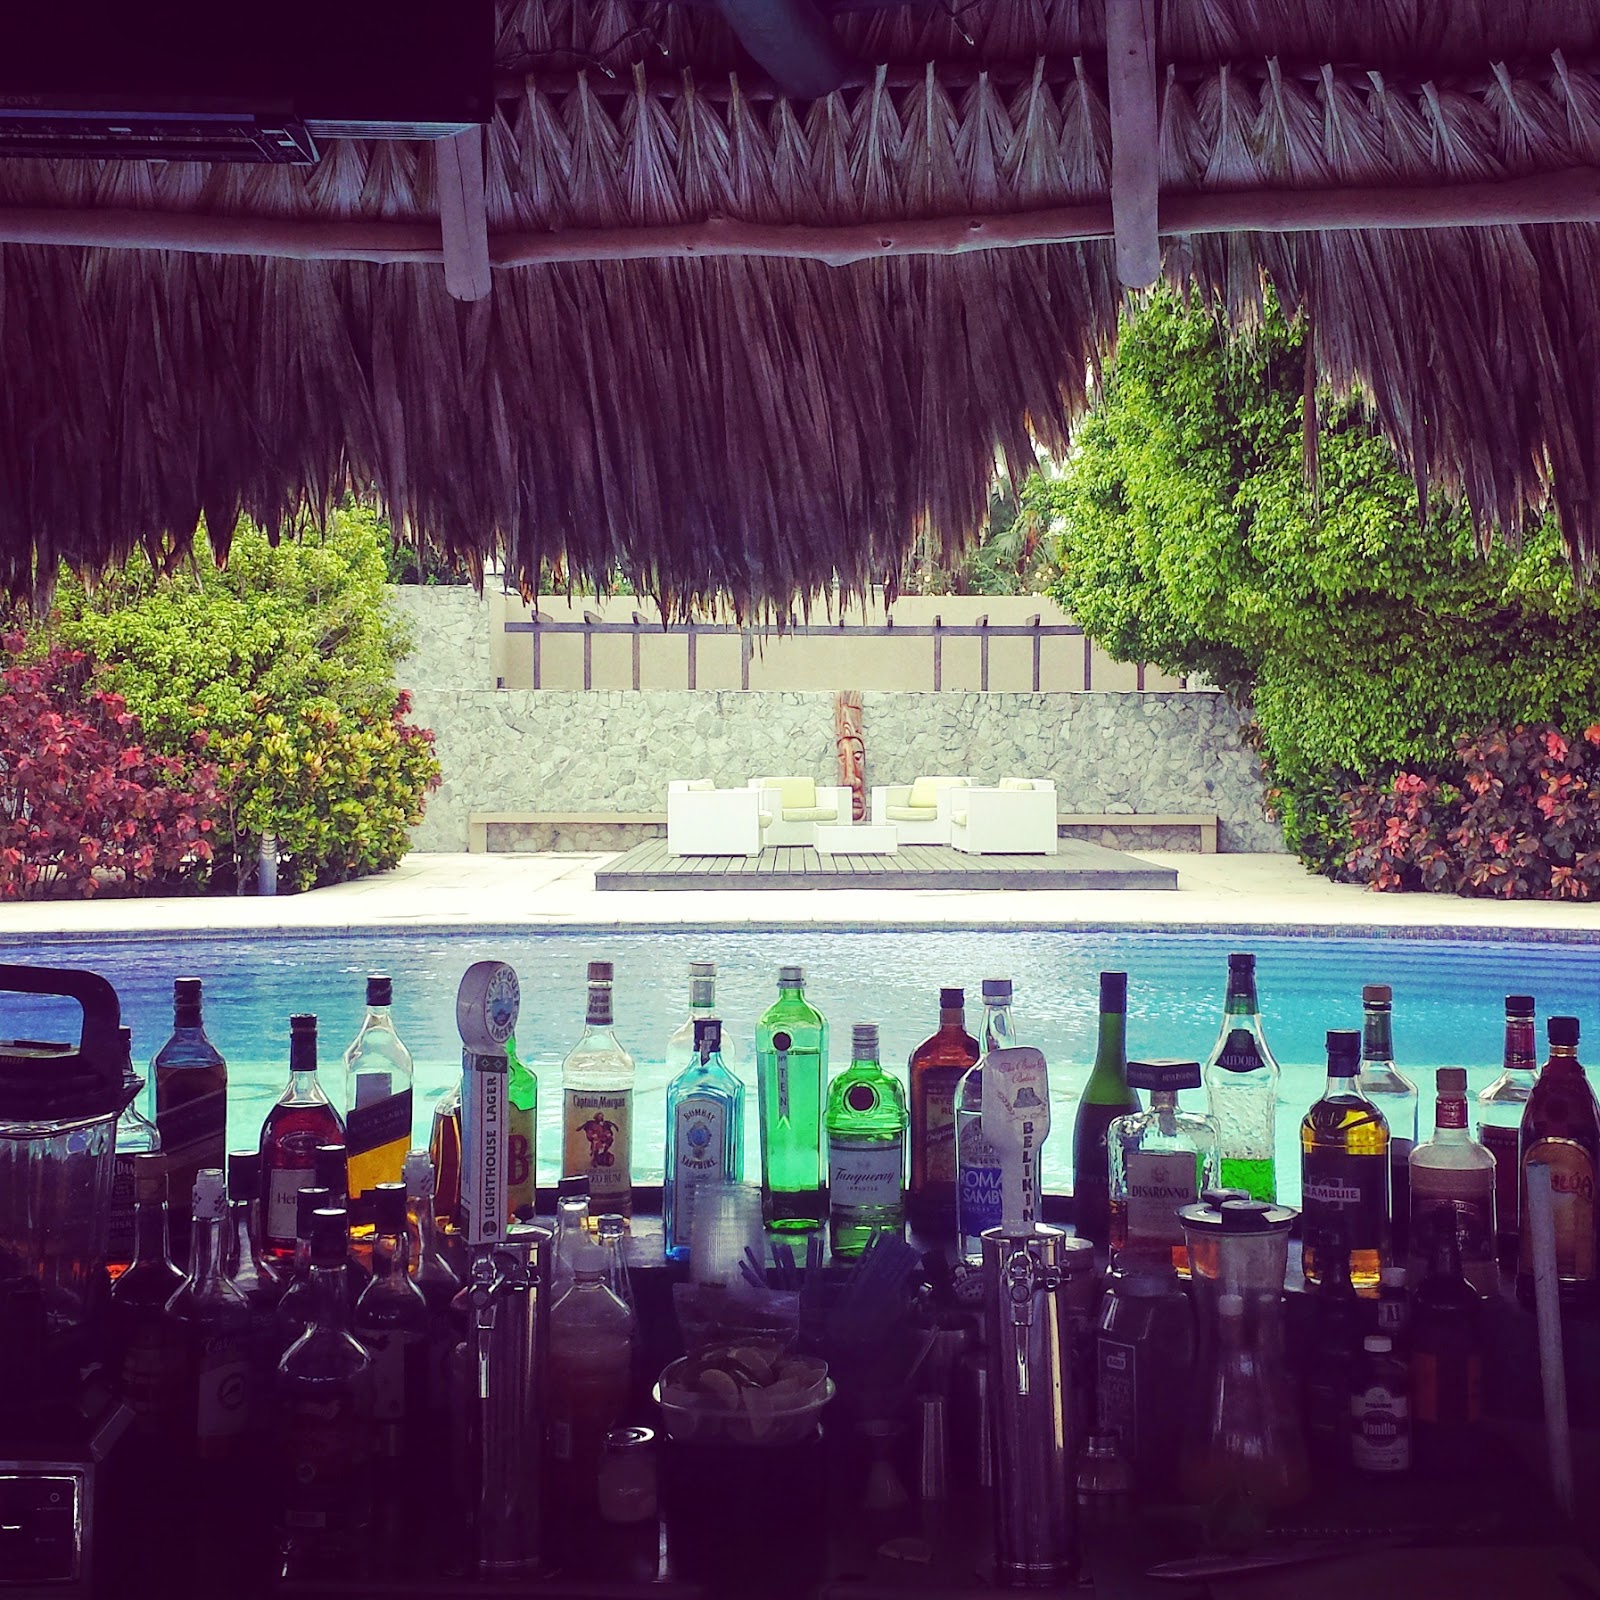 Remaxvipbelize: Belize Ocean Club Pool party S